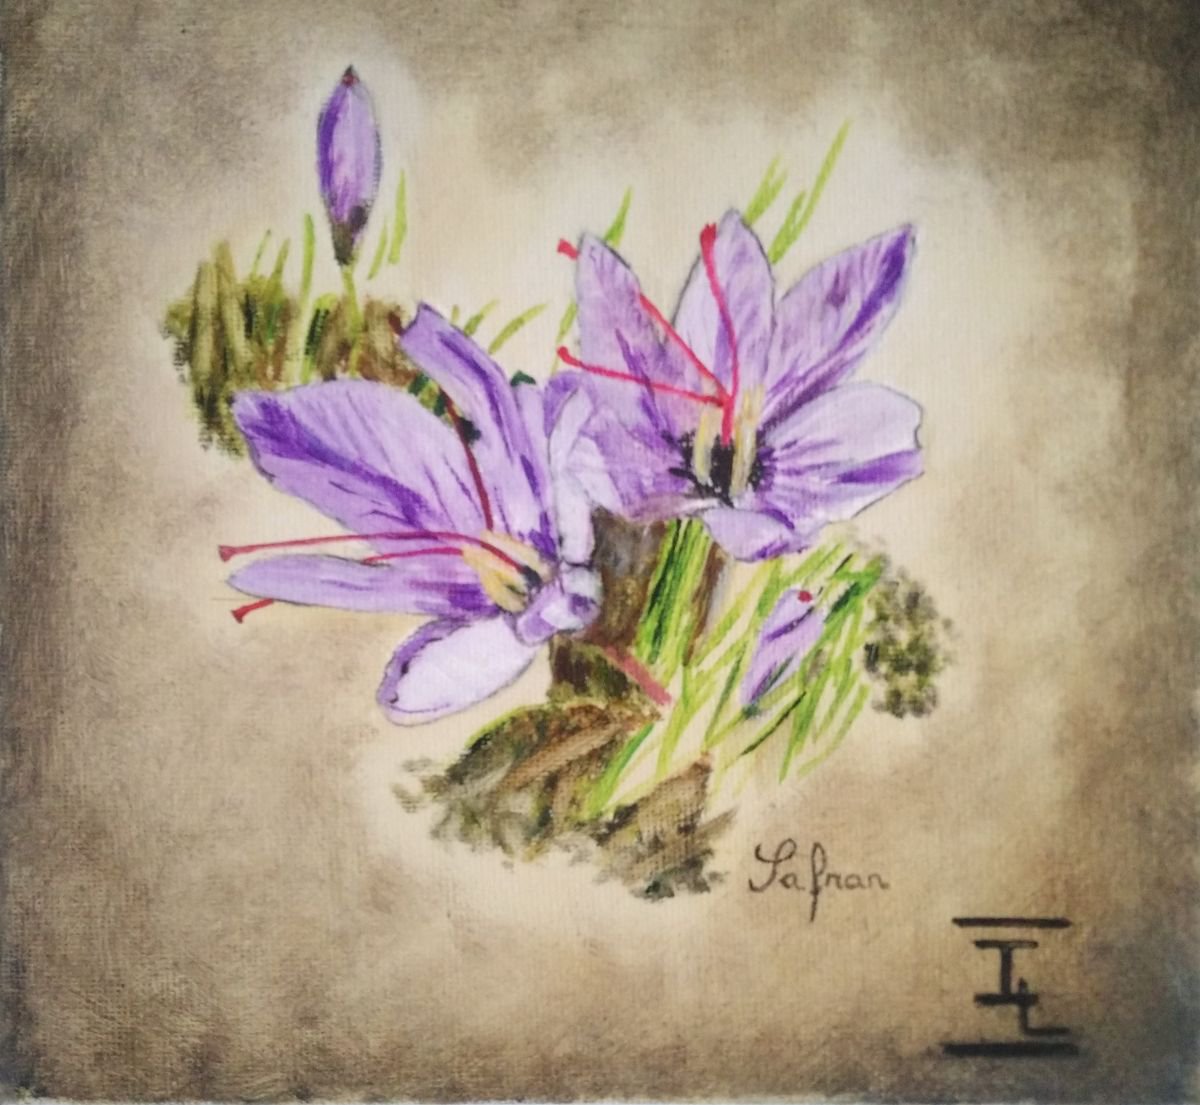 Flower of saffron by Isabelle Lucas